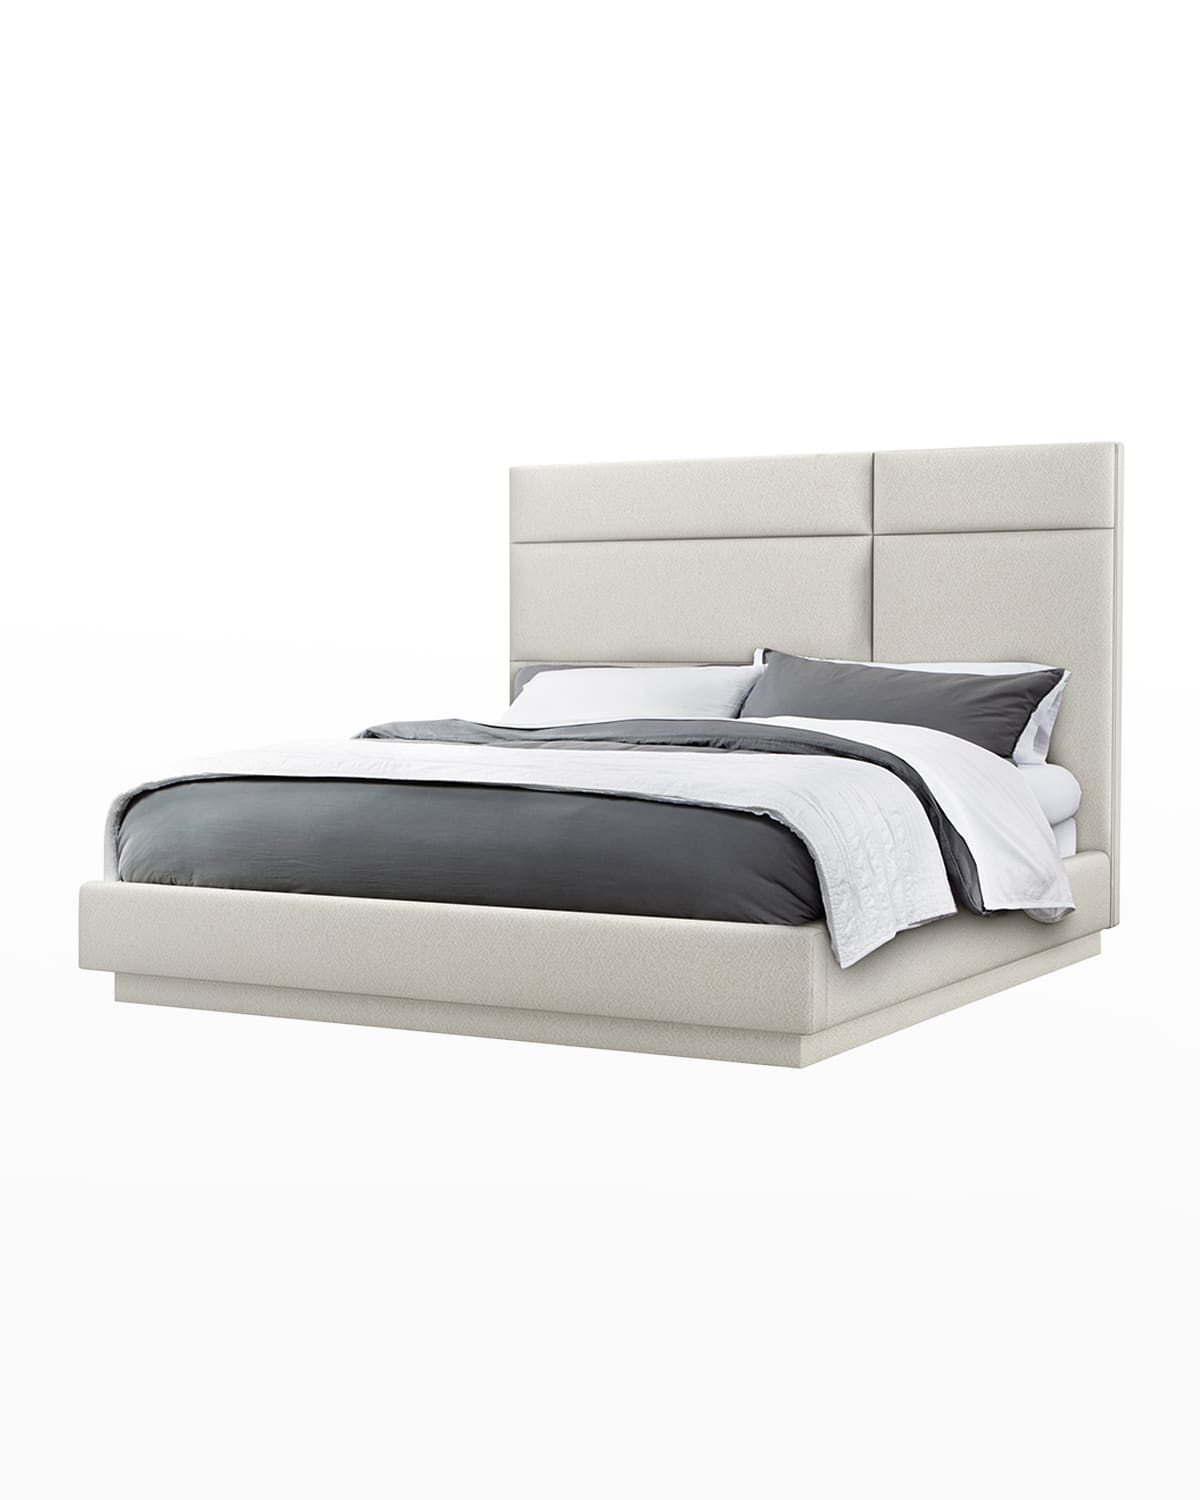 Interlude Home Quadrant King Bed